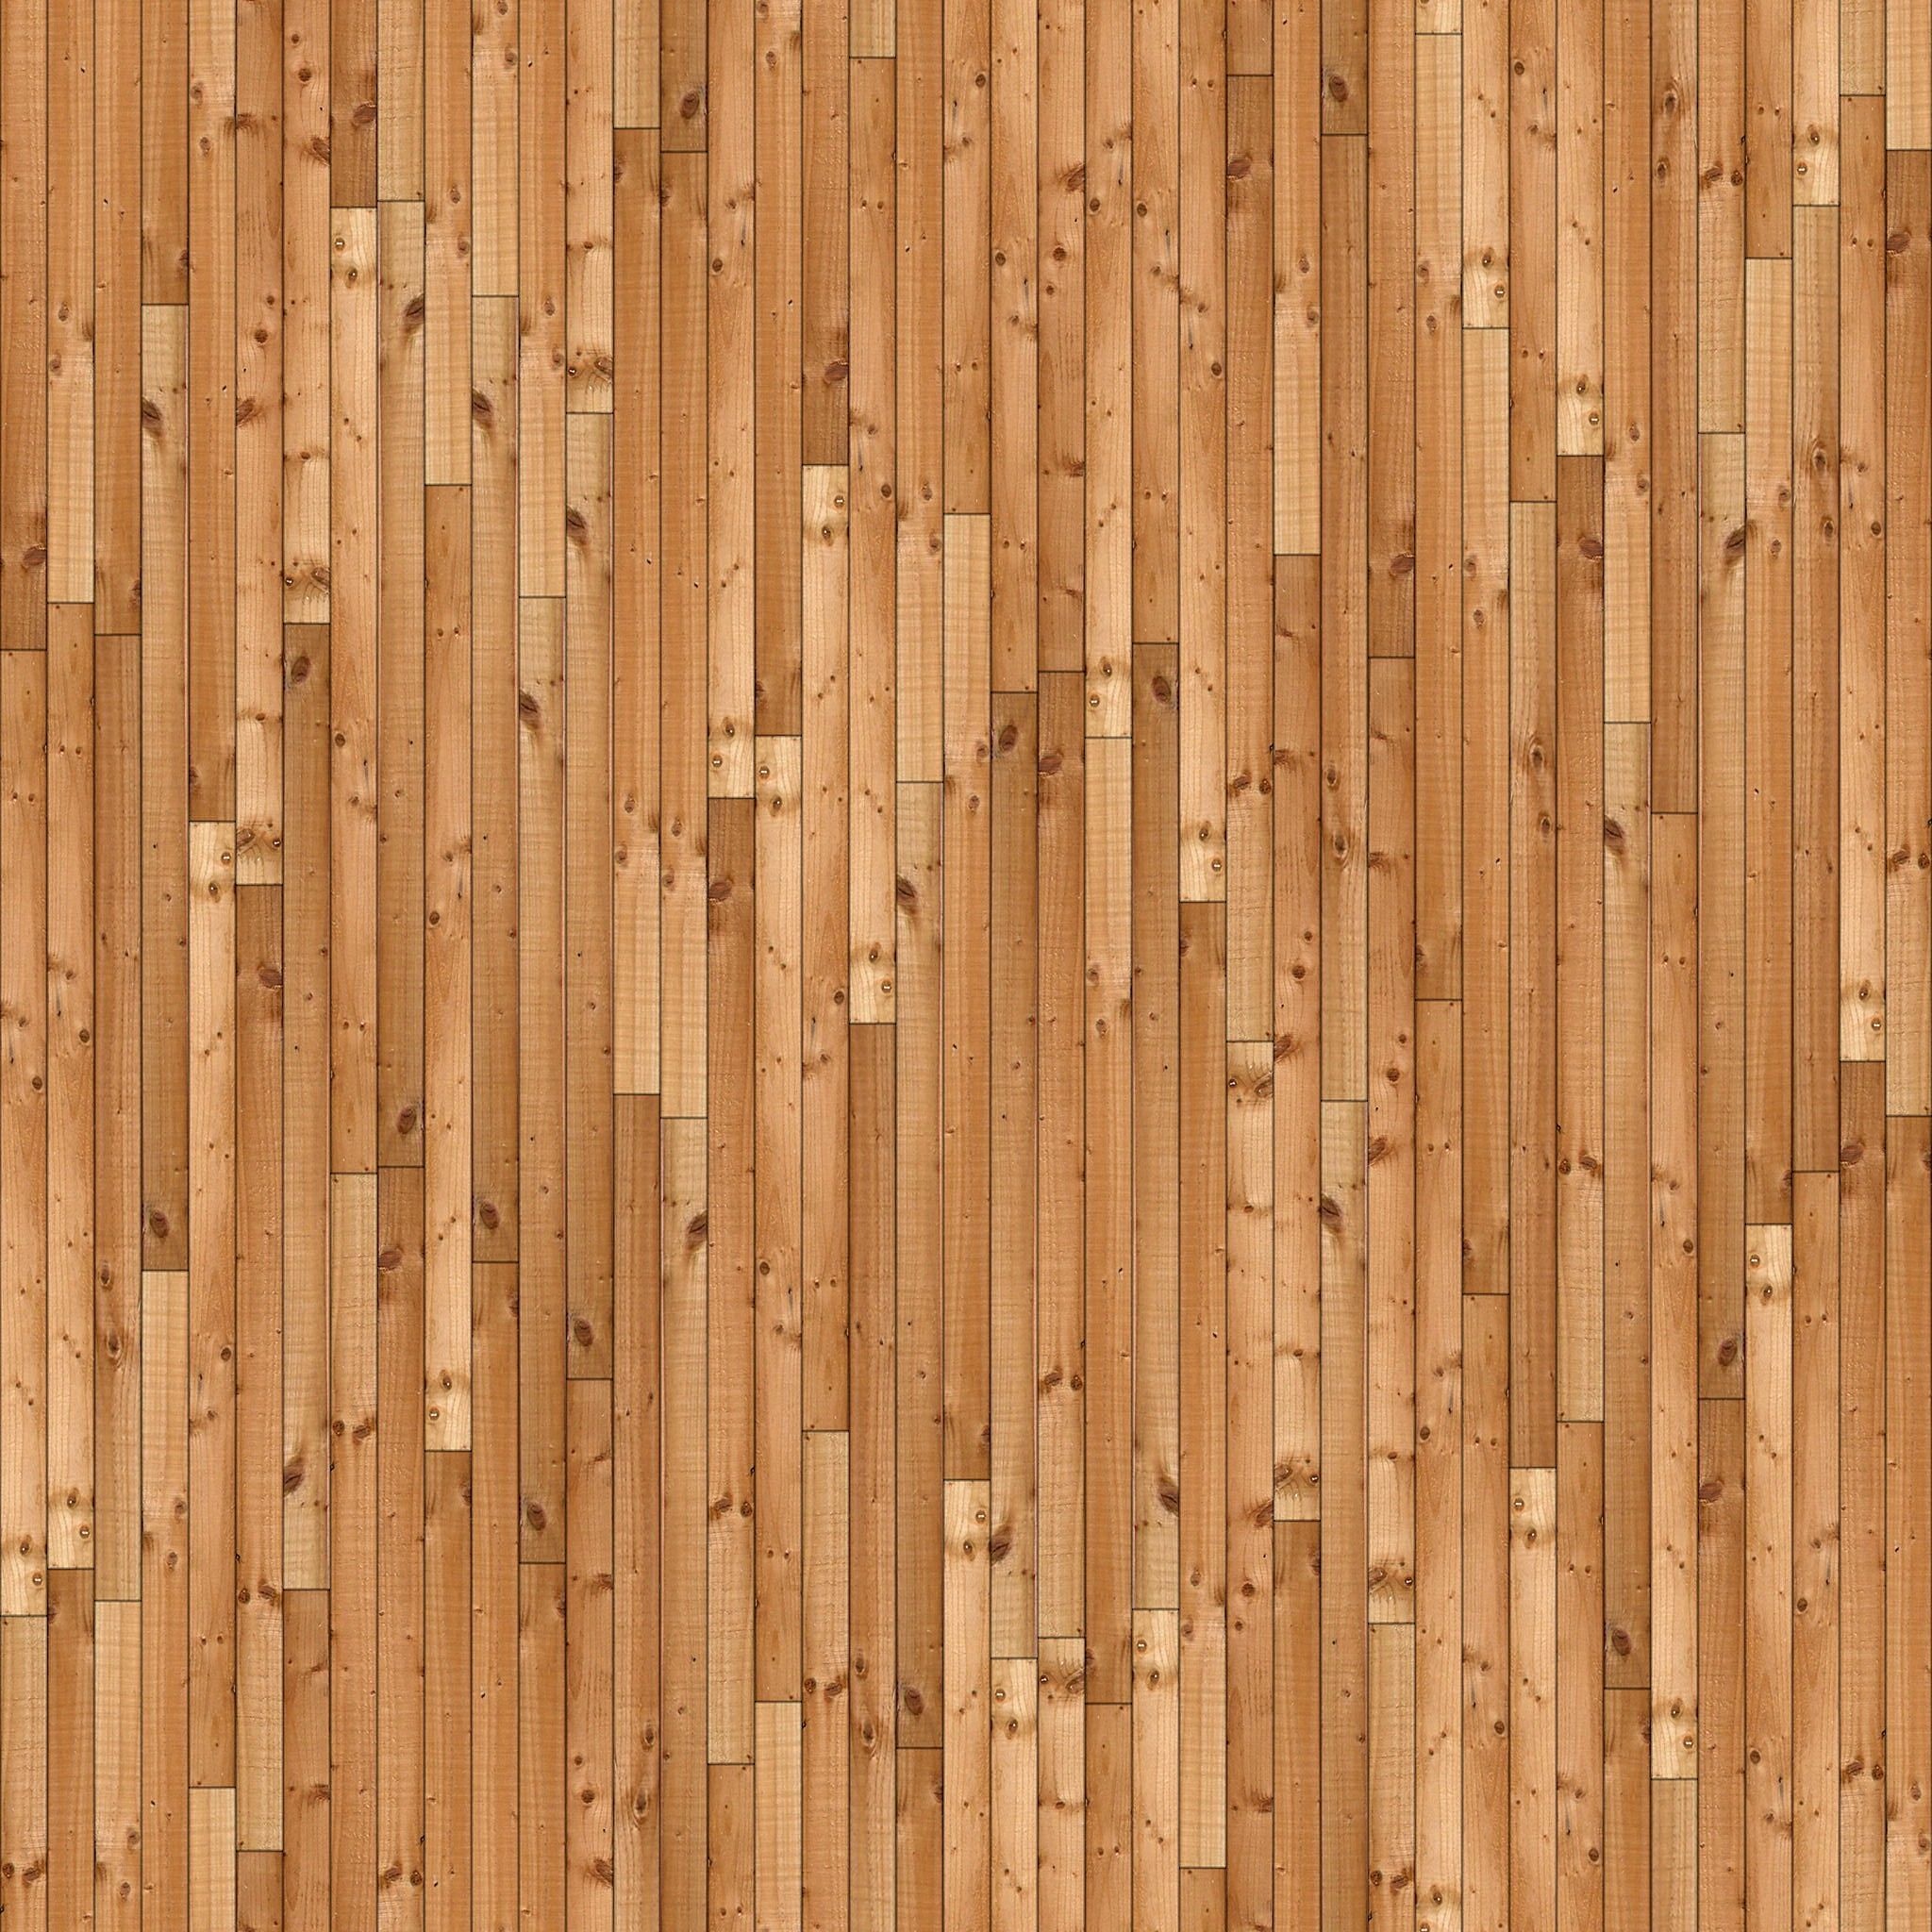 Wood floor textures, Light and dark tones, Natural wood patterns, 2050x2050 HD Handy